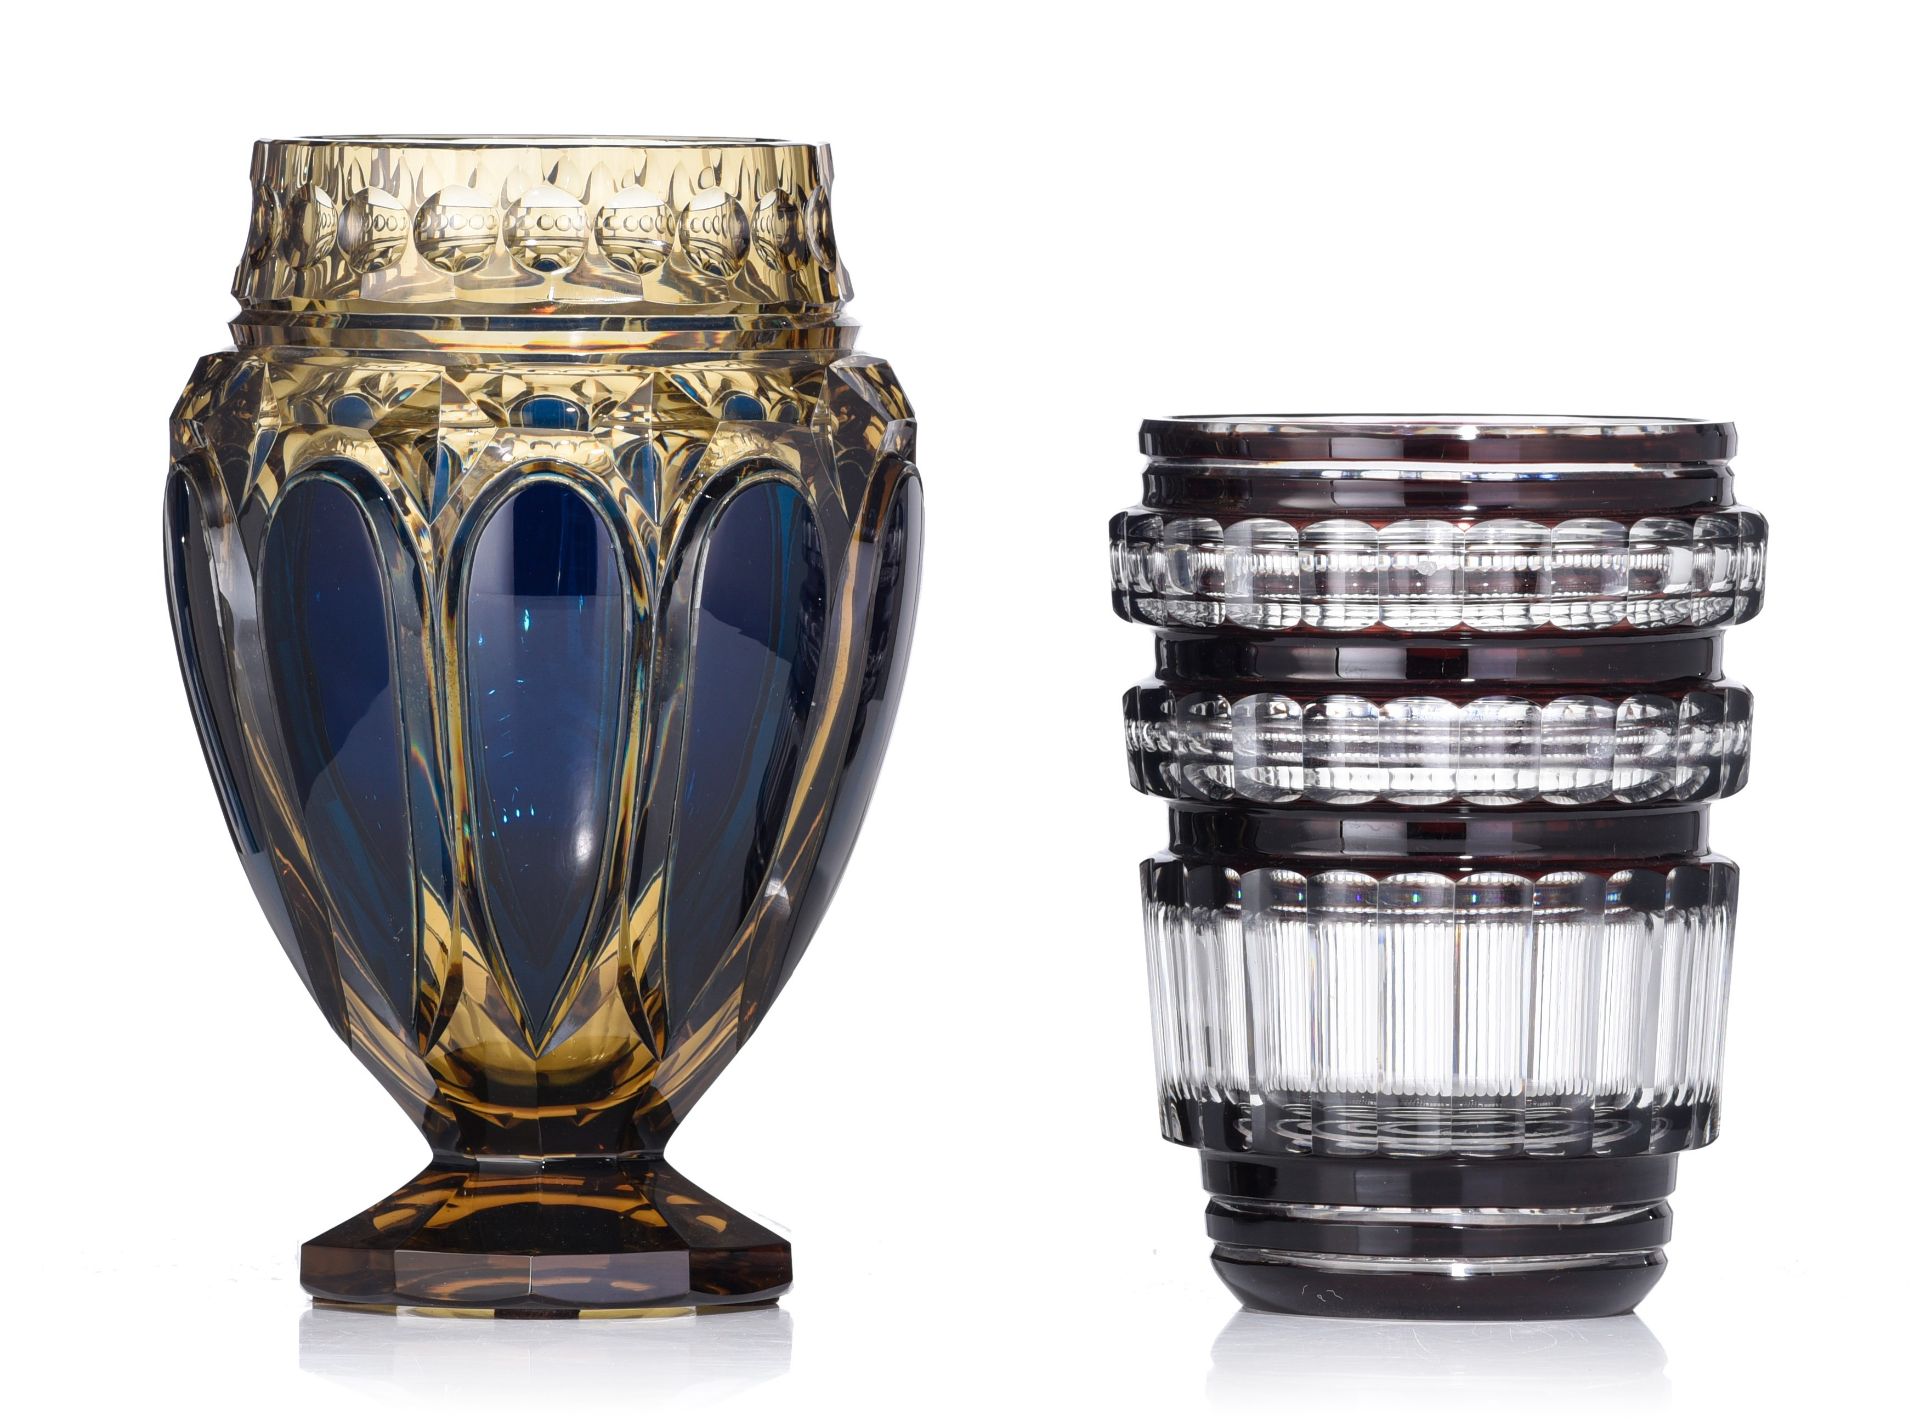 (BIDDING ONLY ON CARLOBONTE.BE) A pair of cut crystal Val-Saint-Lambert vases, H 22 - 28,5 cm